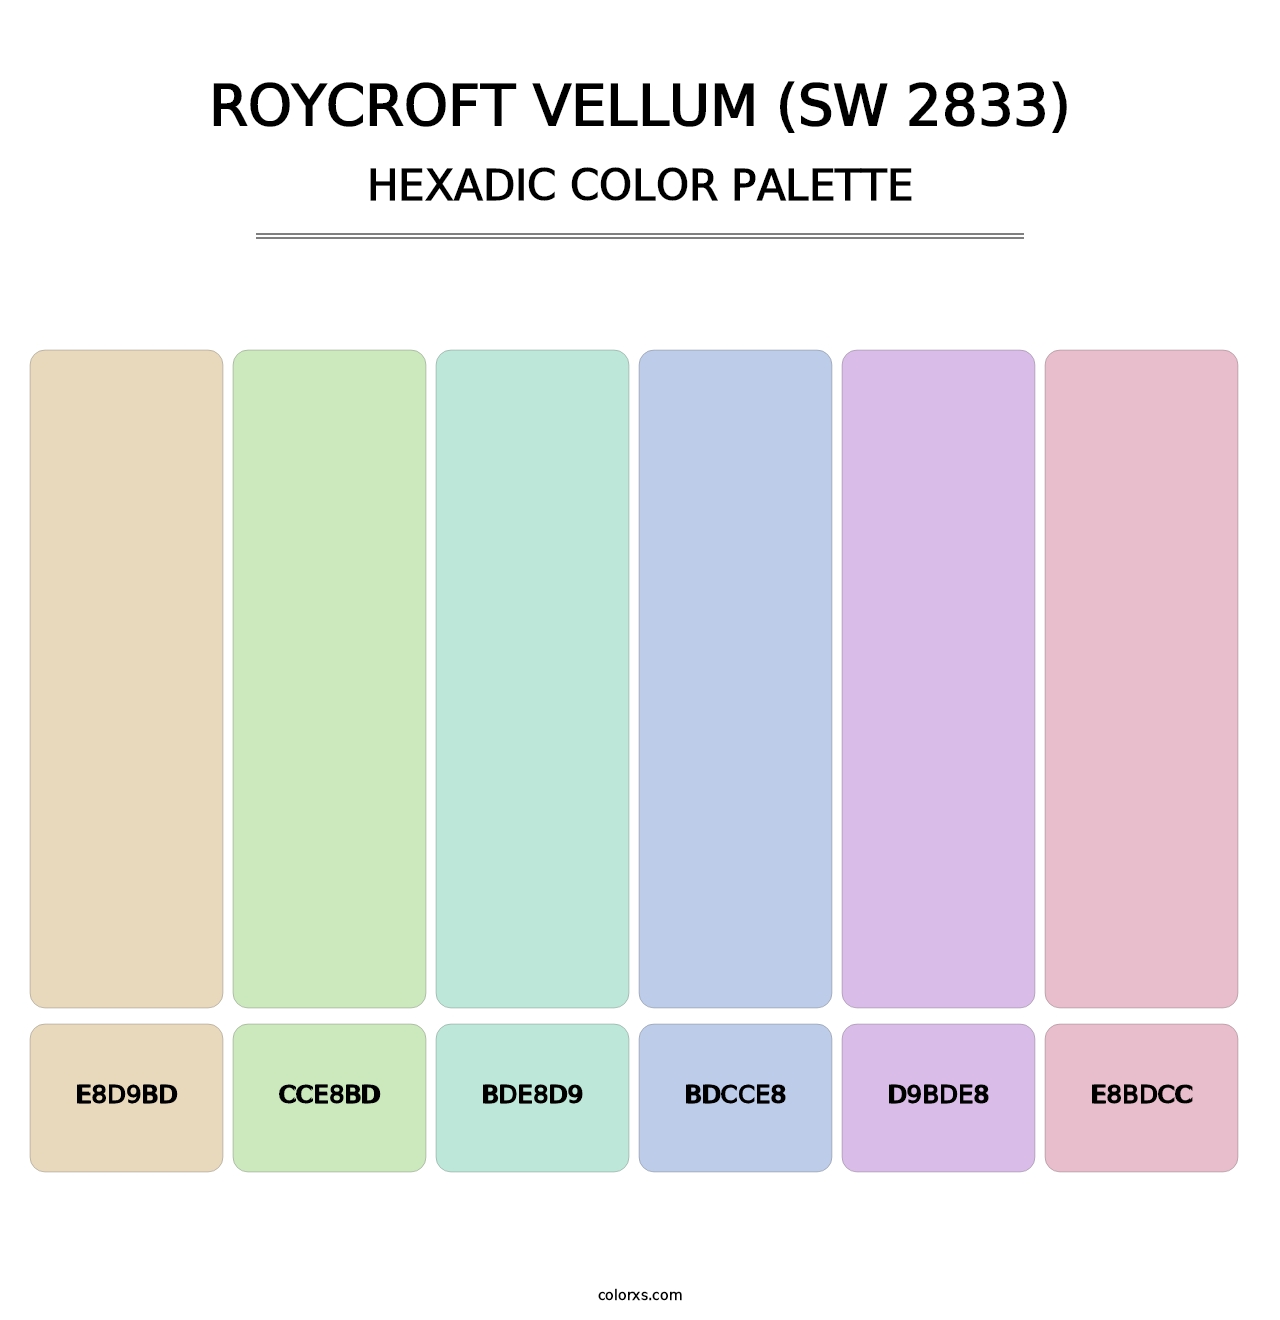 Roycroft Vellum (SW 2833) - Hexadic Color Palette